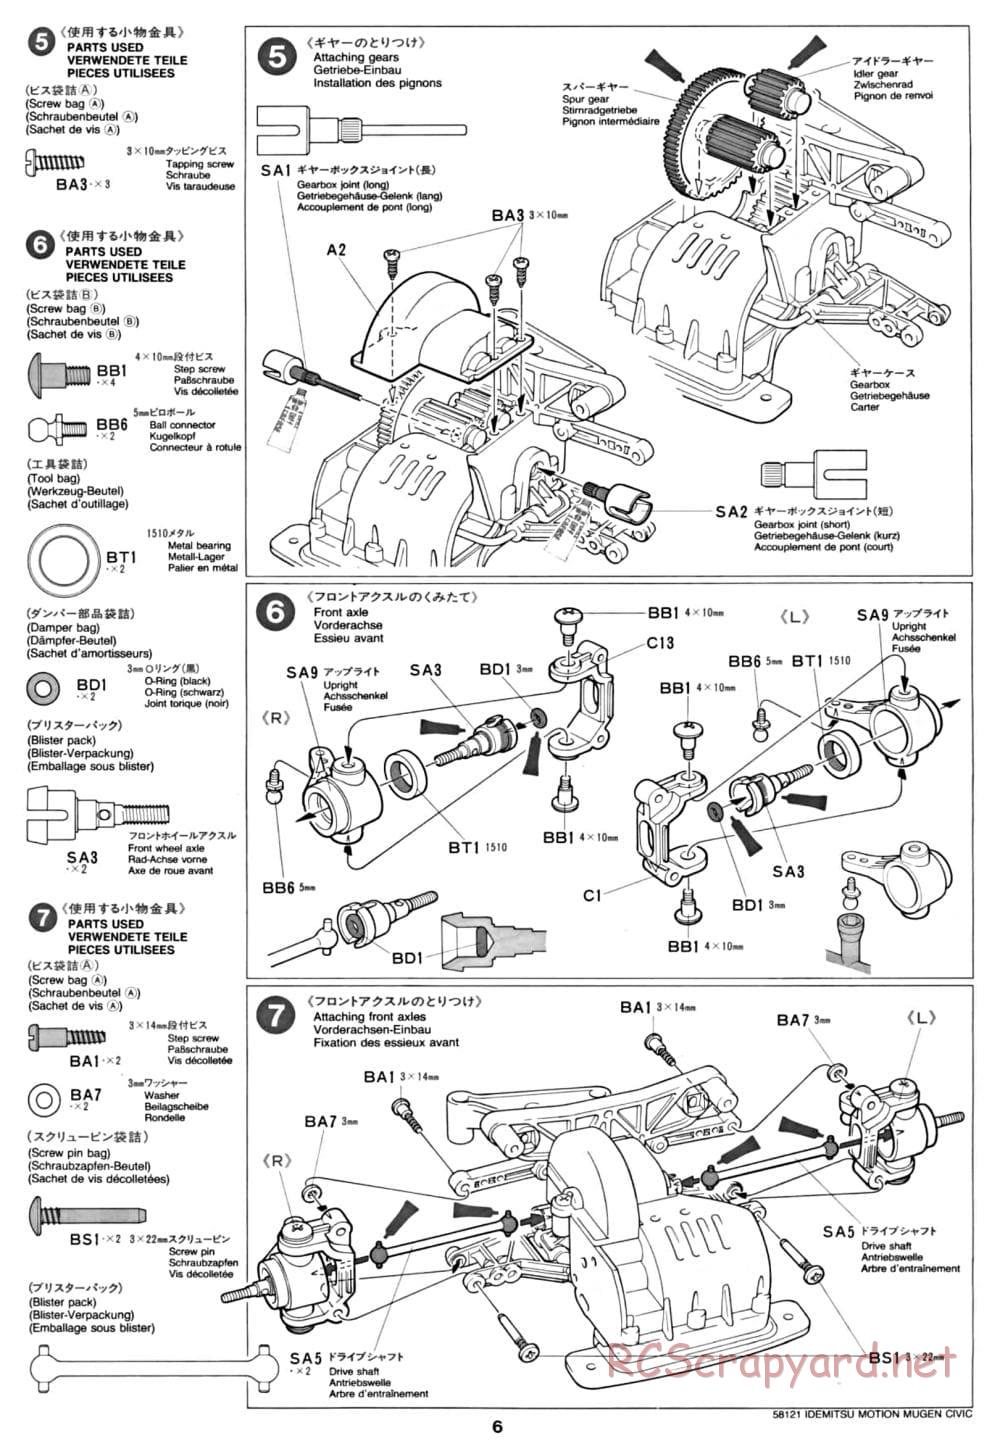 Tamiya - Idemitsu Motion Mugen Civic - FF-01 Chassis - Manual - Page 6